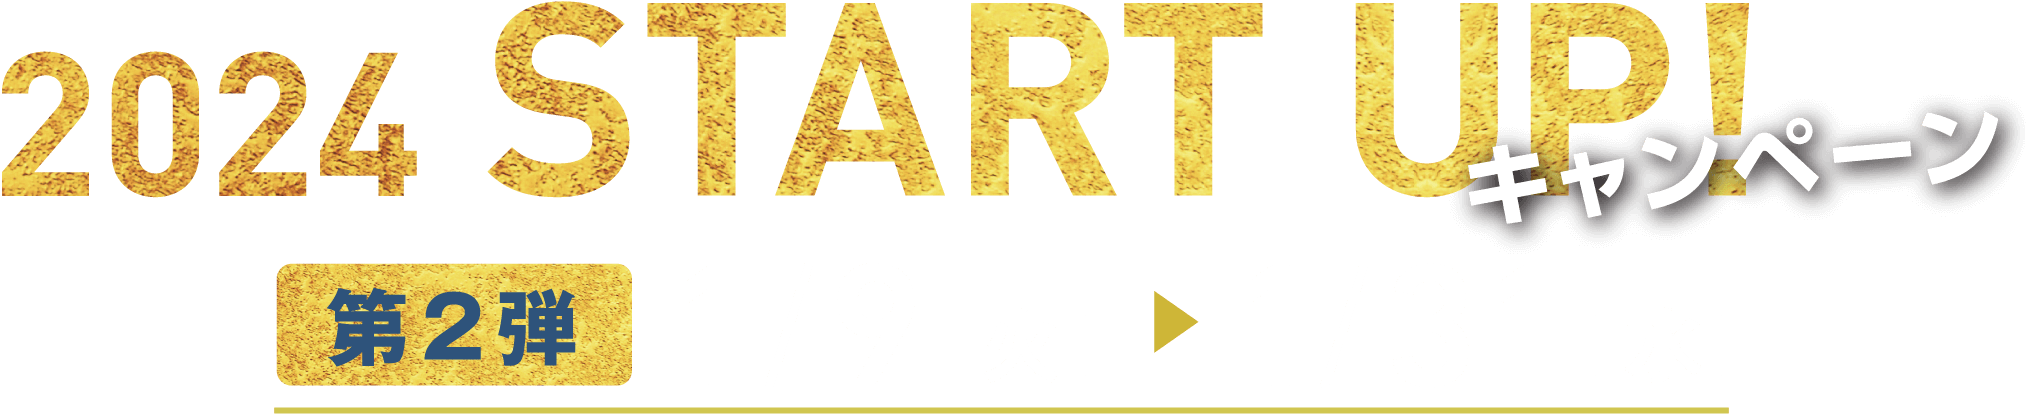 2024 START UP! キャンペーン 第二弾:1/9[火]～1/31[水]